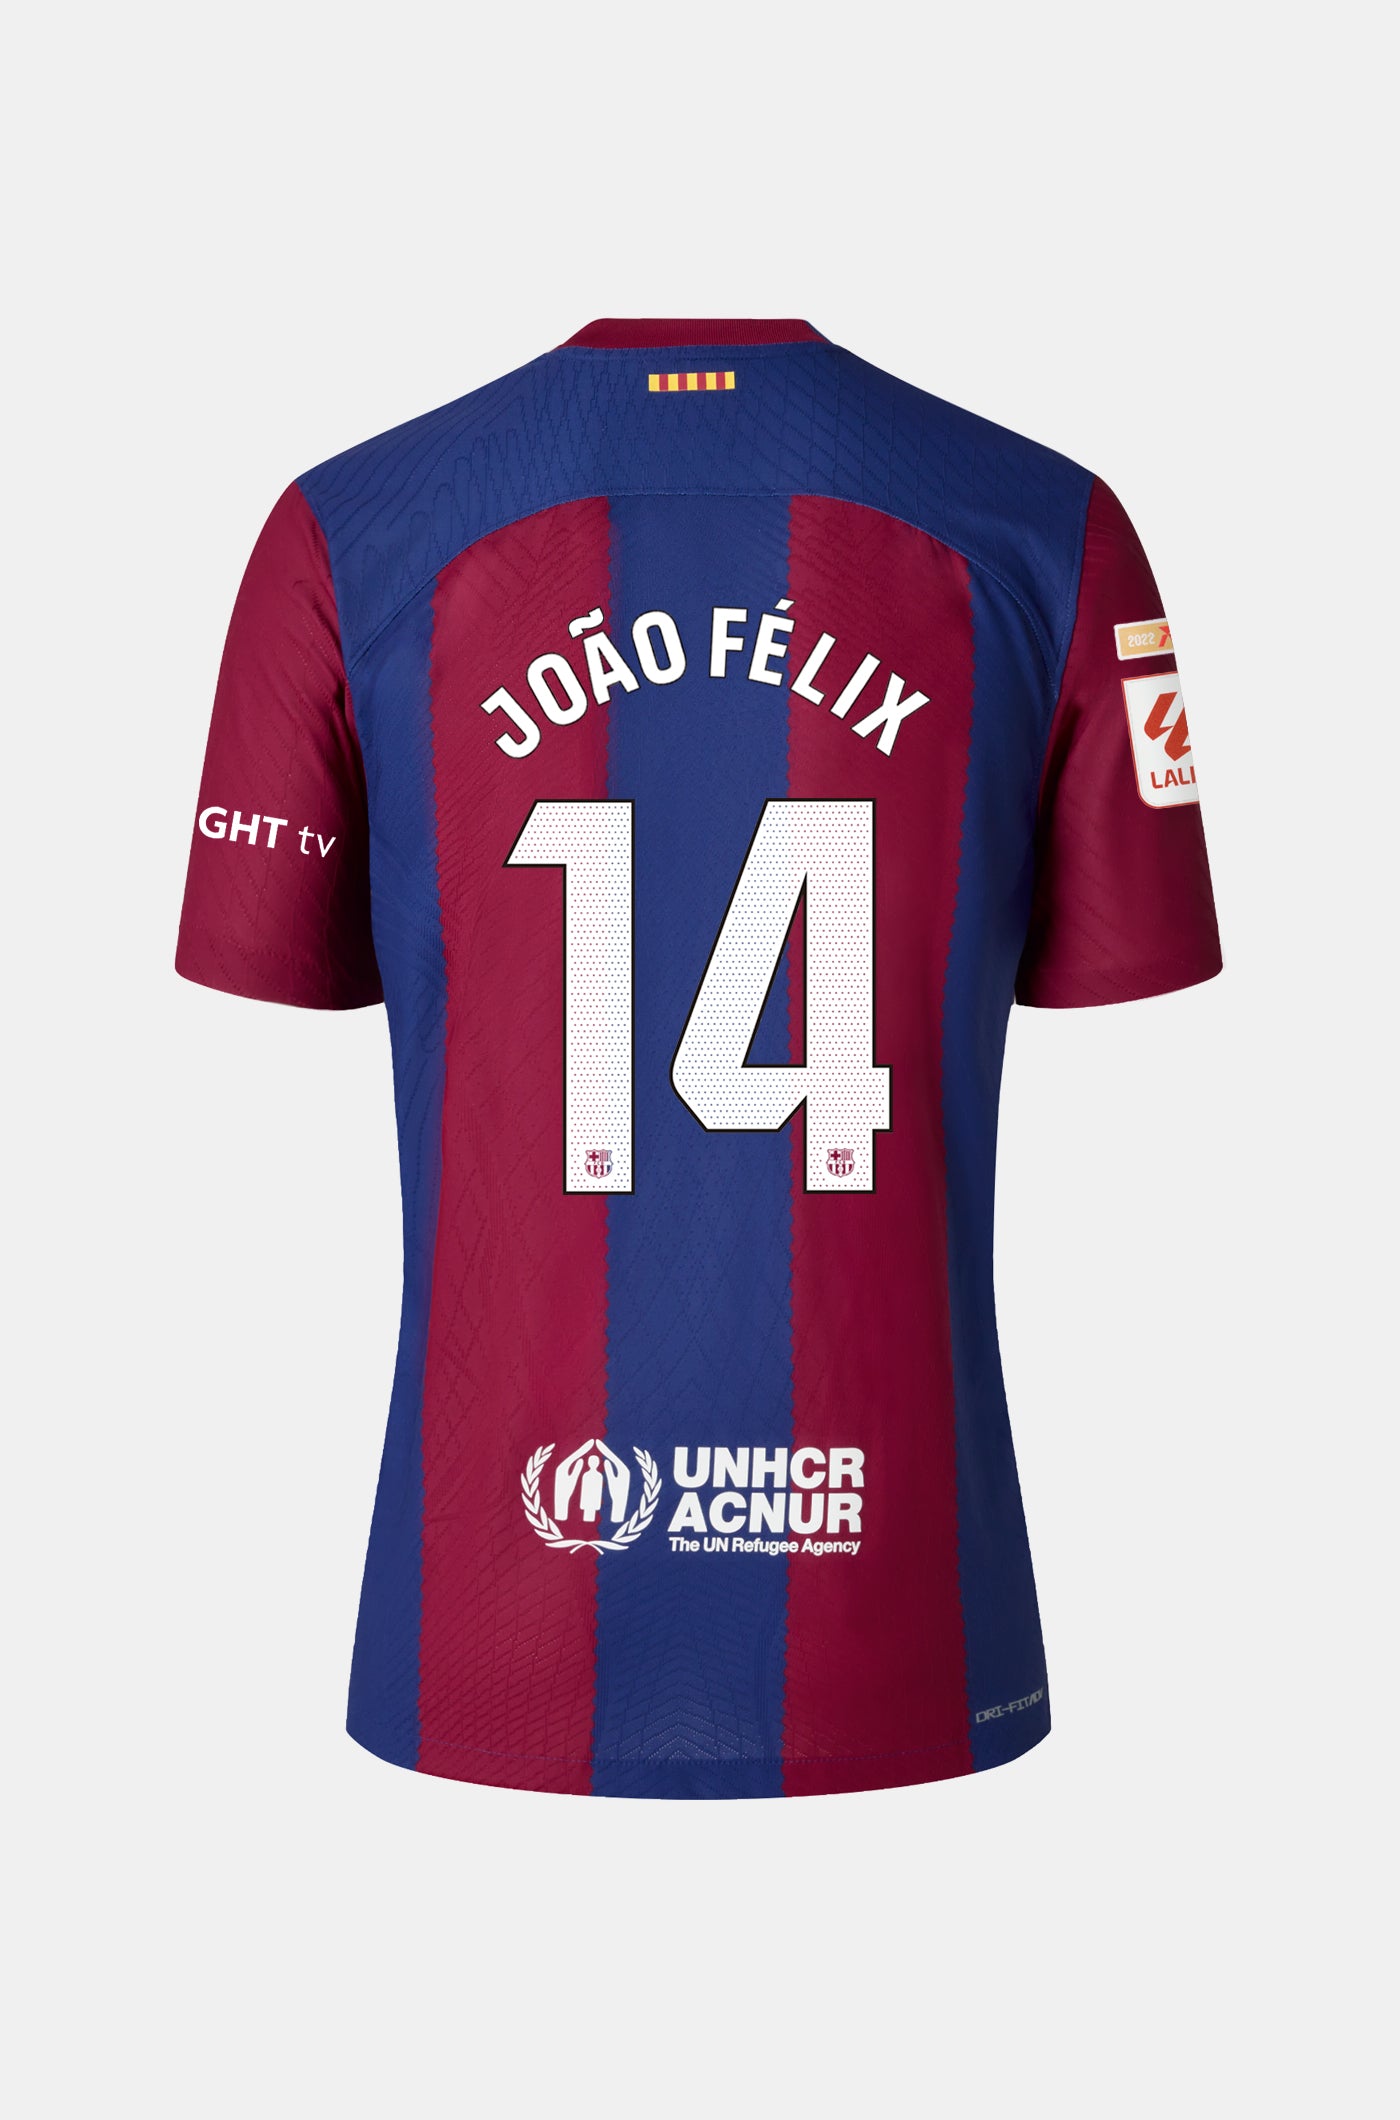 LFP FC Barcelona home shirt 23/24 Player's Edition - JOÃO FELIX